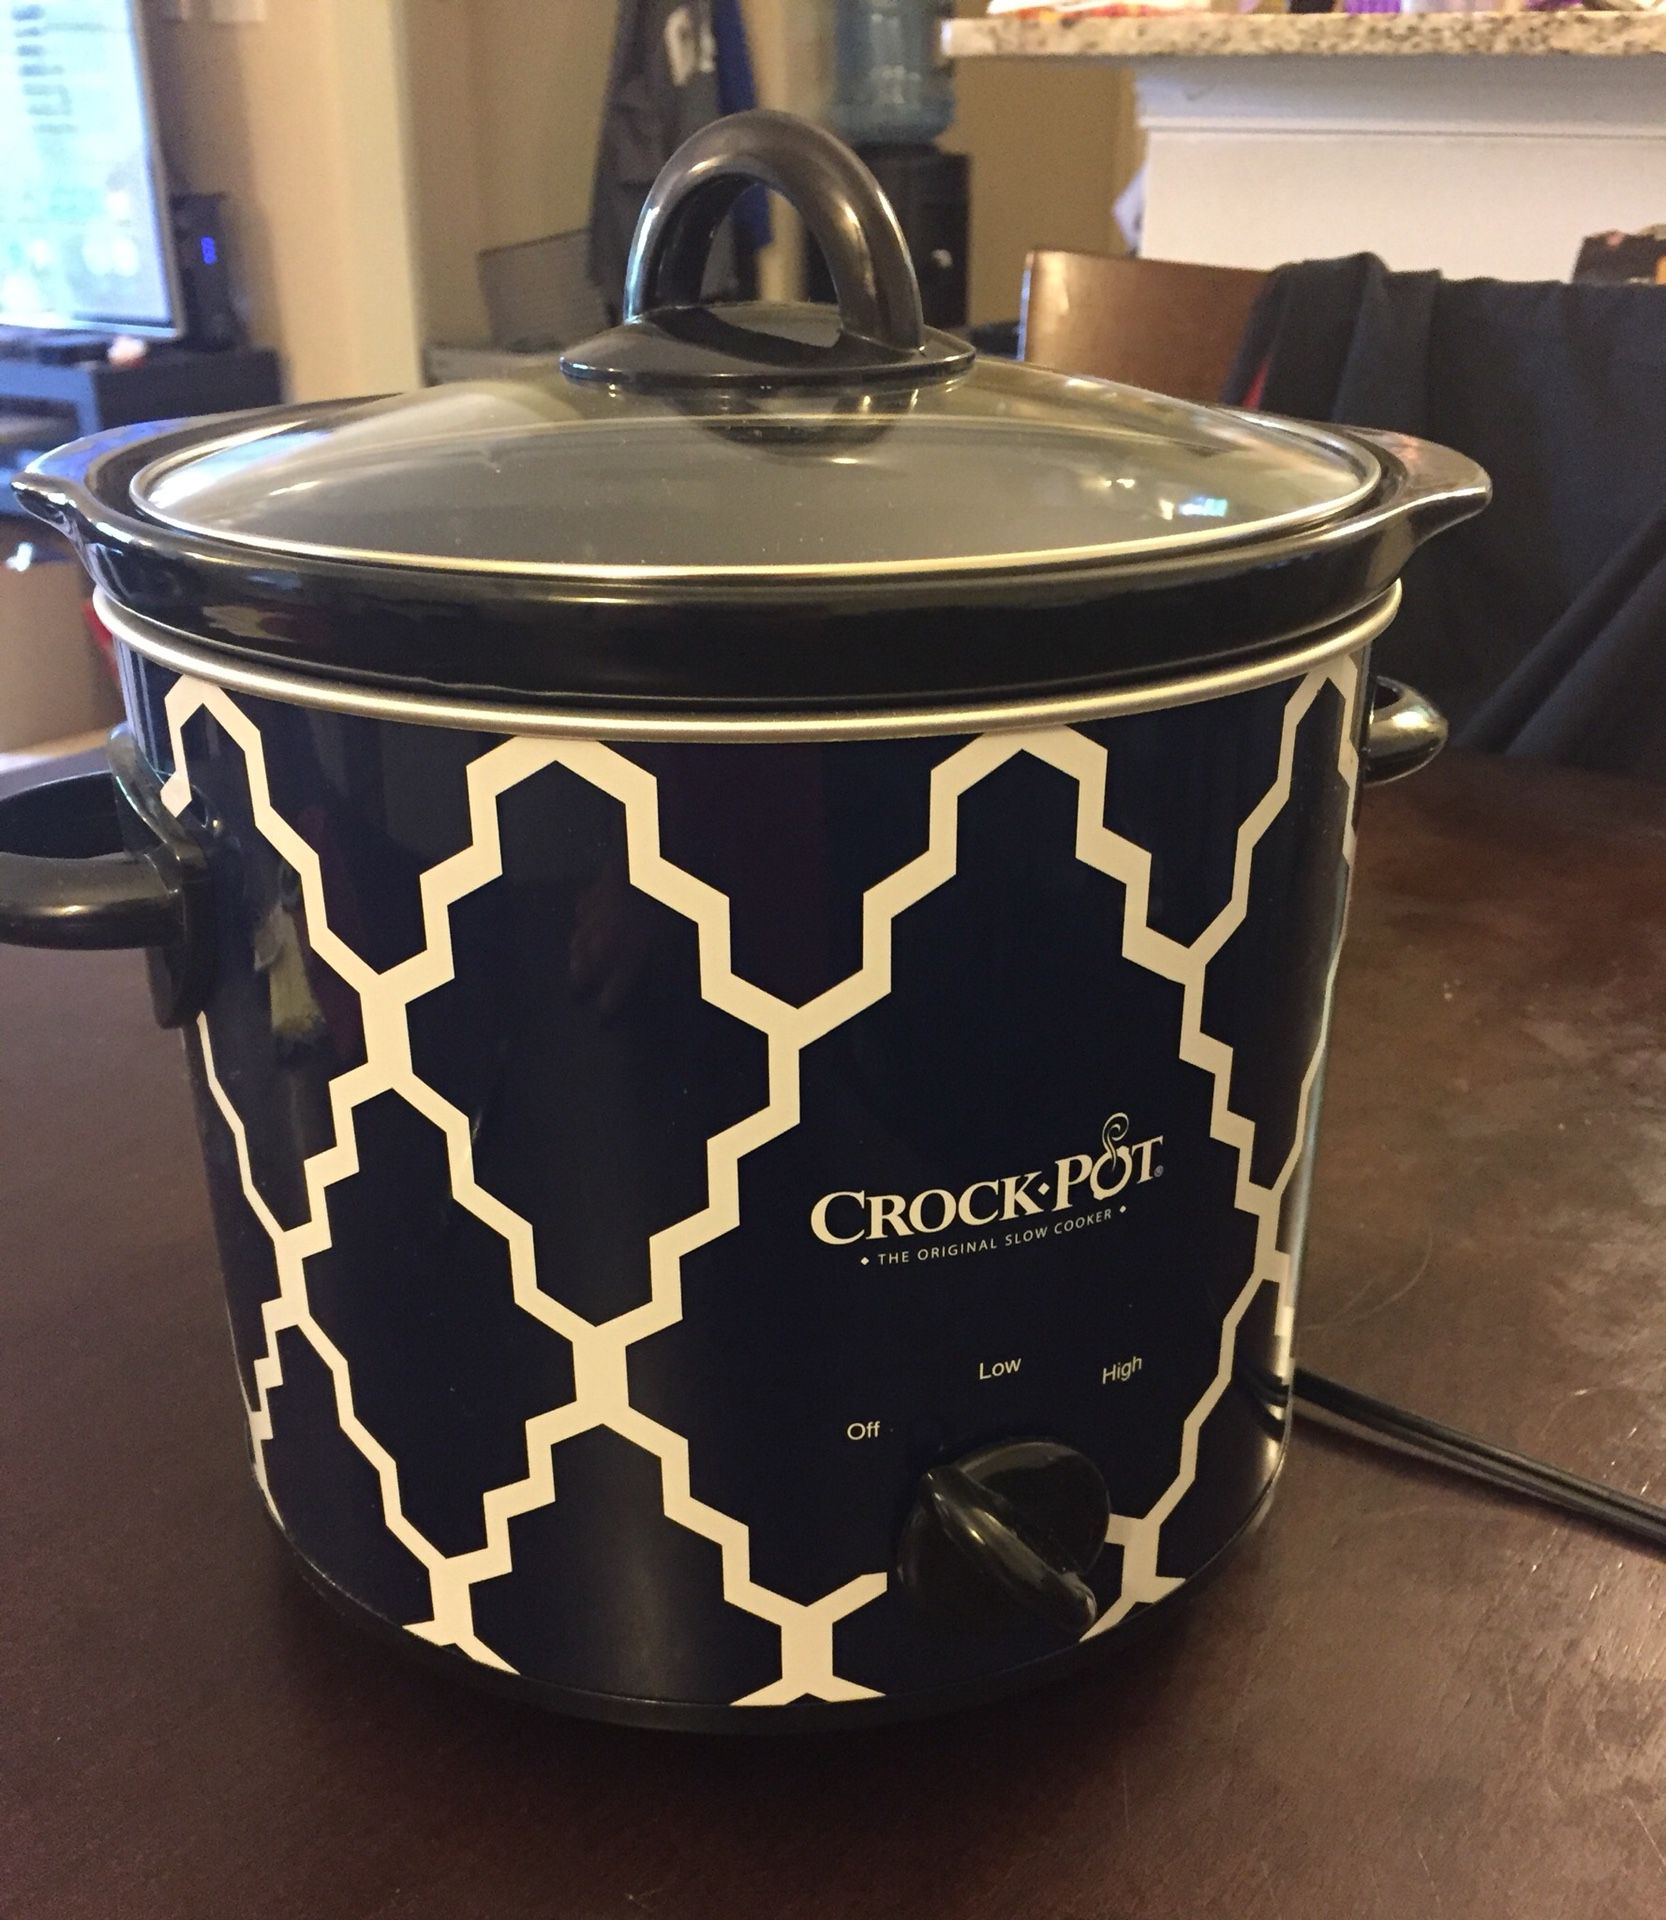 Medium size crockpot